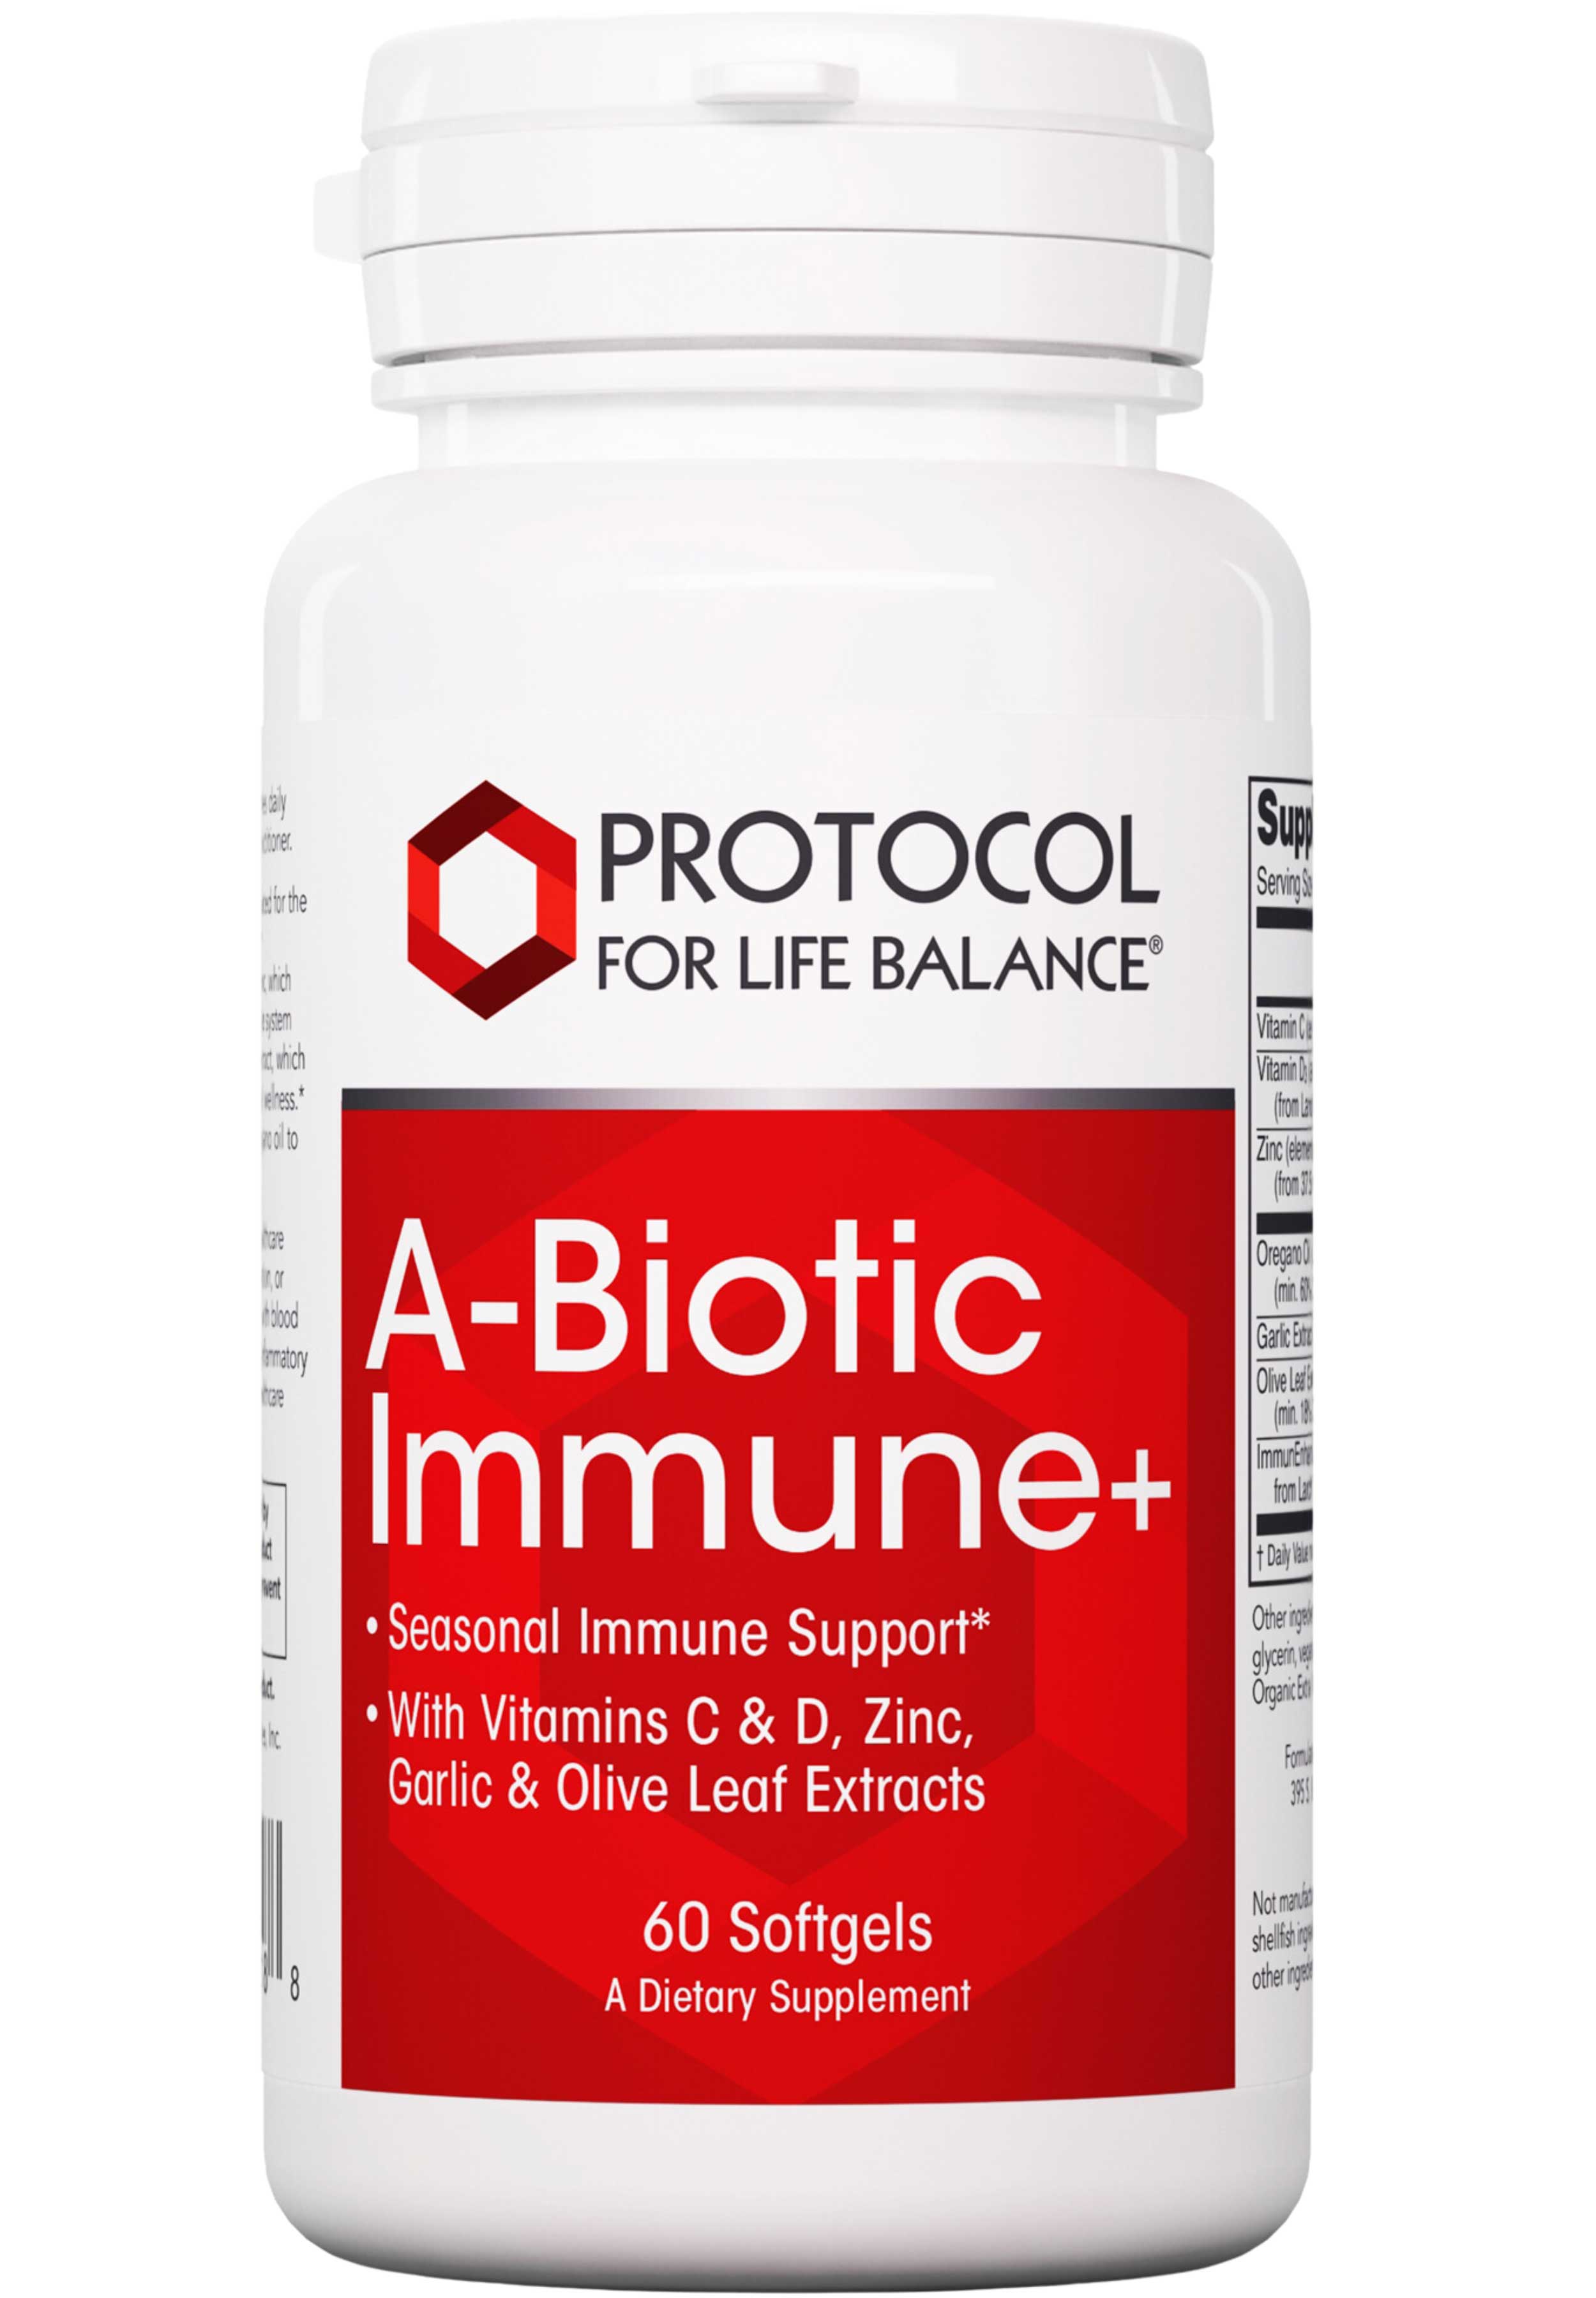 Protocol for Life Balance A-Biotic Immune+